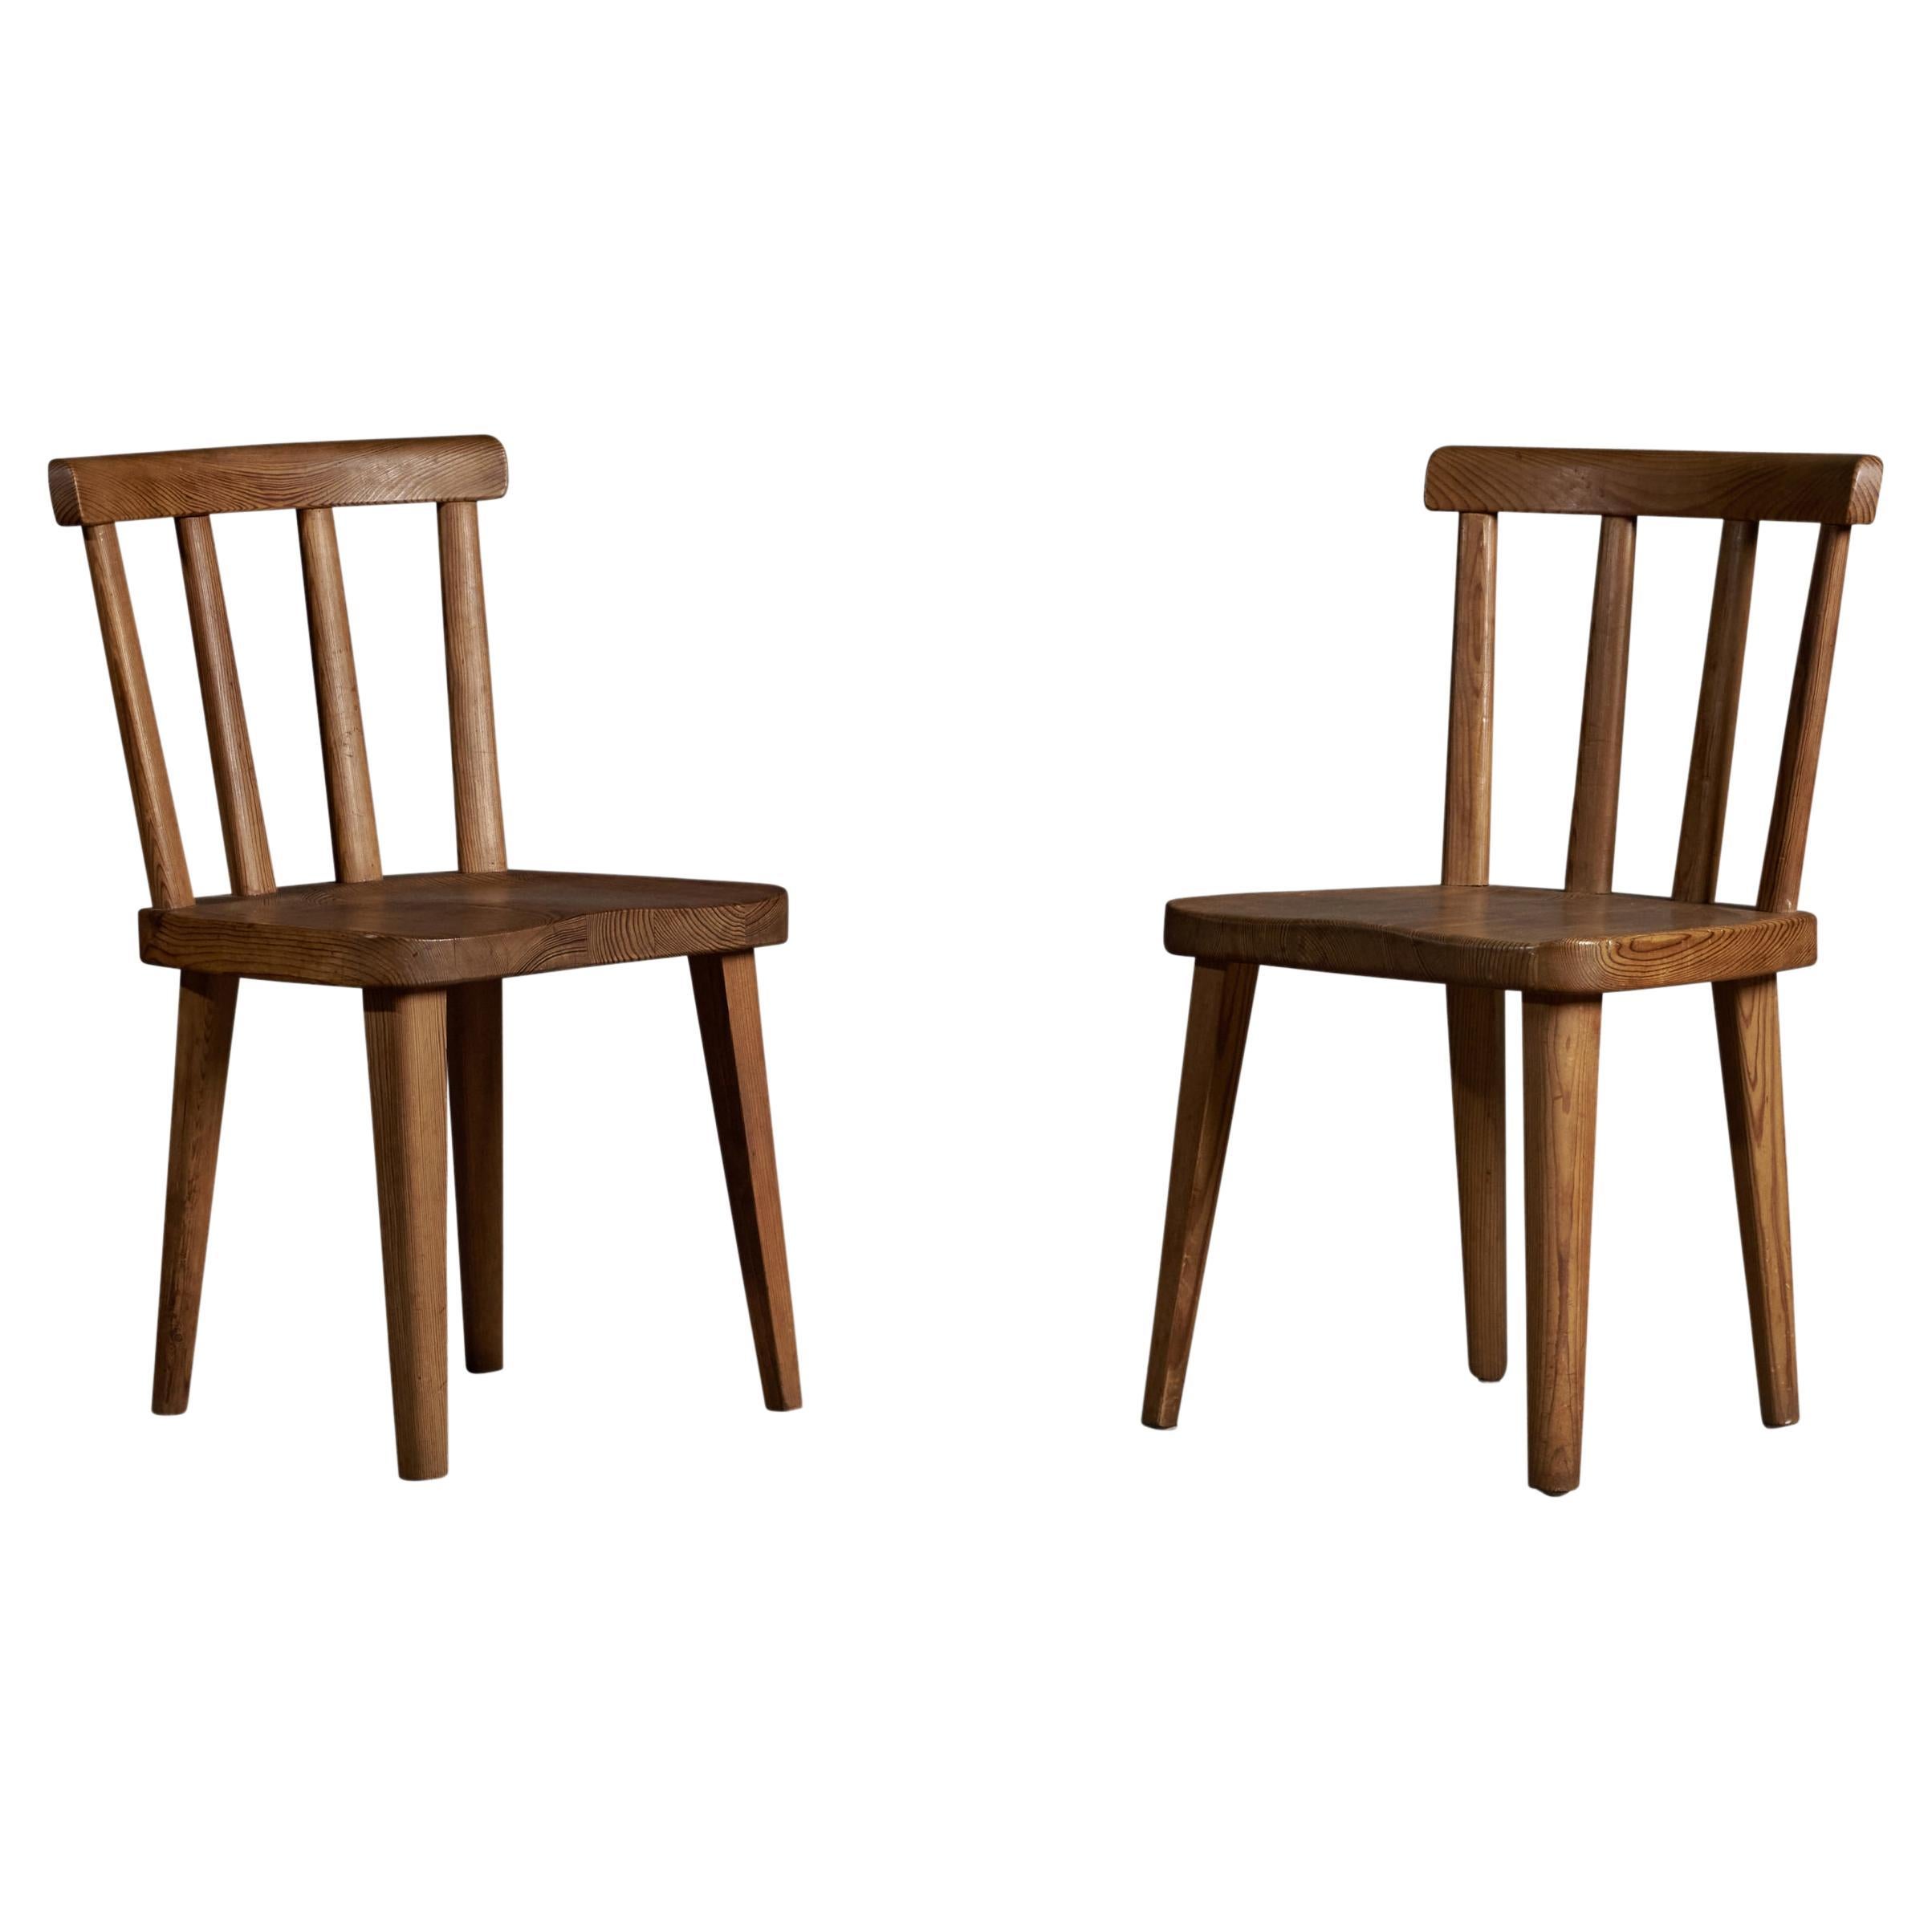 Axel Einar Hjorth, "Utö" Side Chairs, Pine, Sweden, 1930s